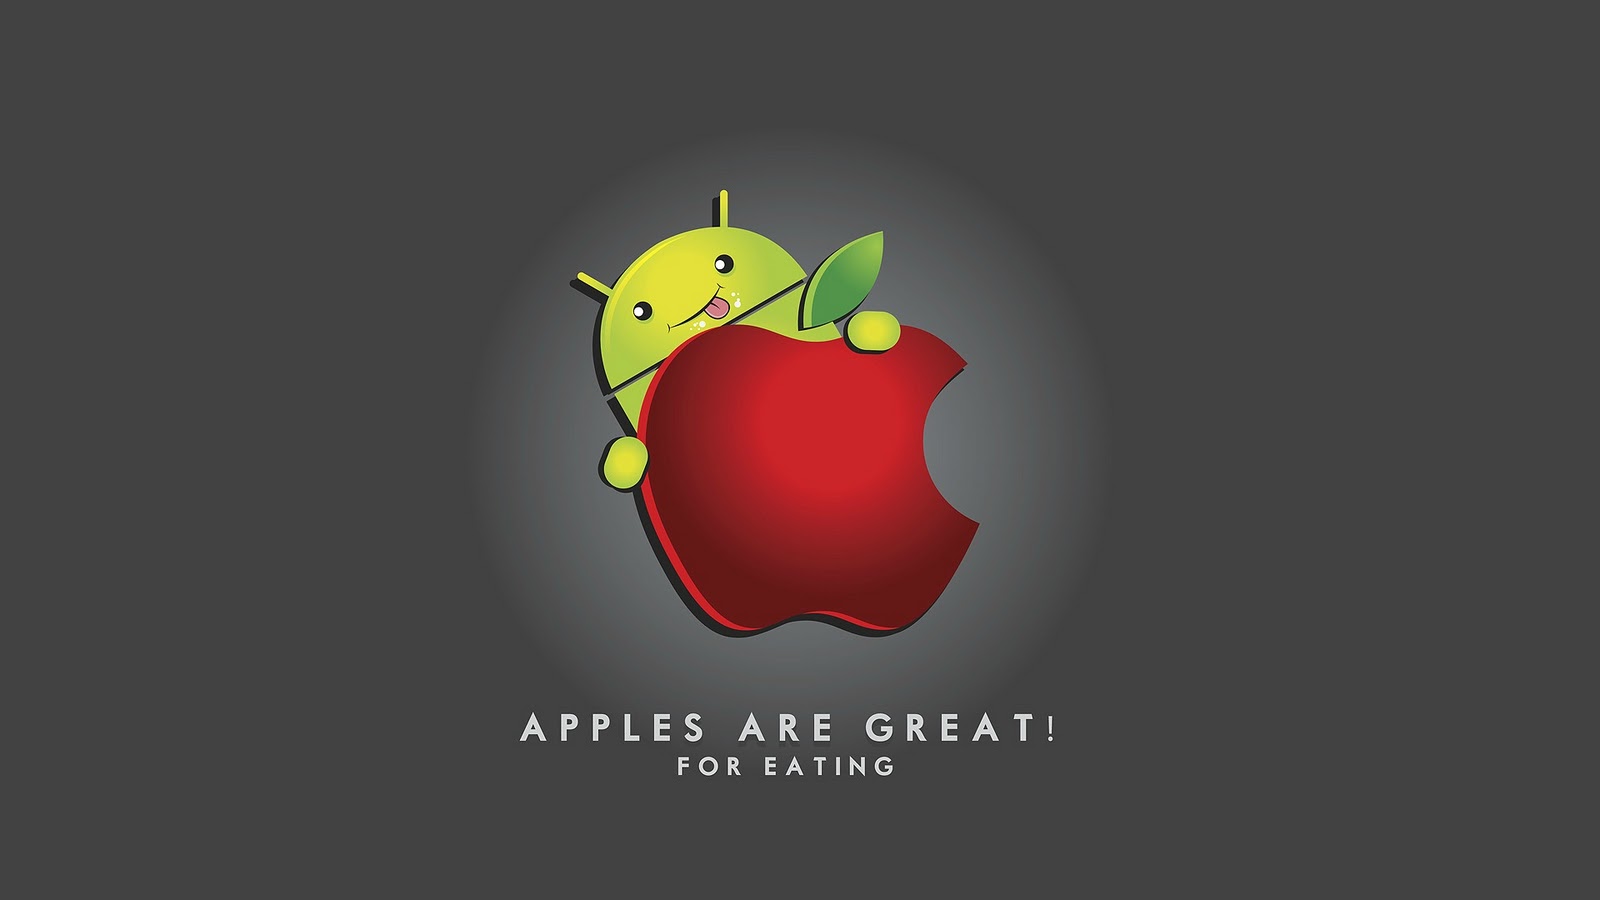 https://blogger.googleusercontent.com/img/b/R29vZ2xl/AVvXsEjqxeTNCmWRUvdFpV_0_23iuWAQboplihTDwH_h011aHzX46QoWxlH0CTnHNkffjTEbA1MrN8zt7IXl6T6rPBGrgOWppO8WW5qXljzUnBdL4IFLn5Oi6Iqn6yZA60S4vh1LIsboE8UrX67p/s1600/19584_funny_android_mascot_eating_apple.jpg